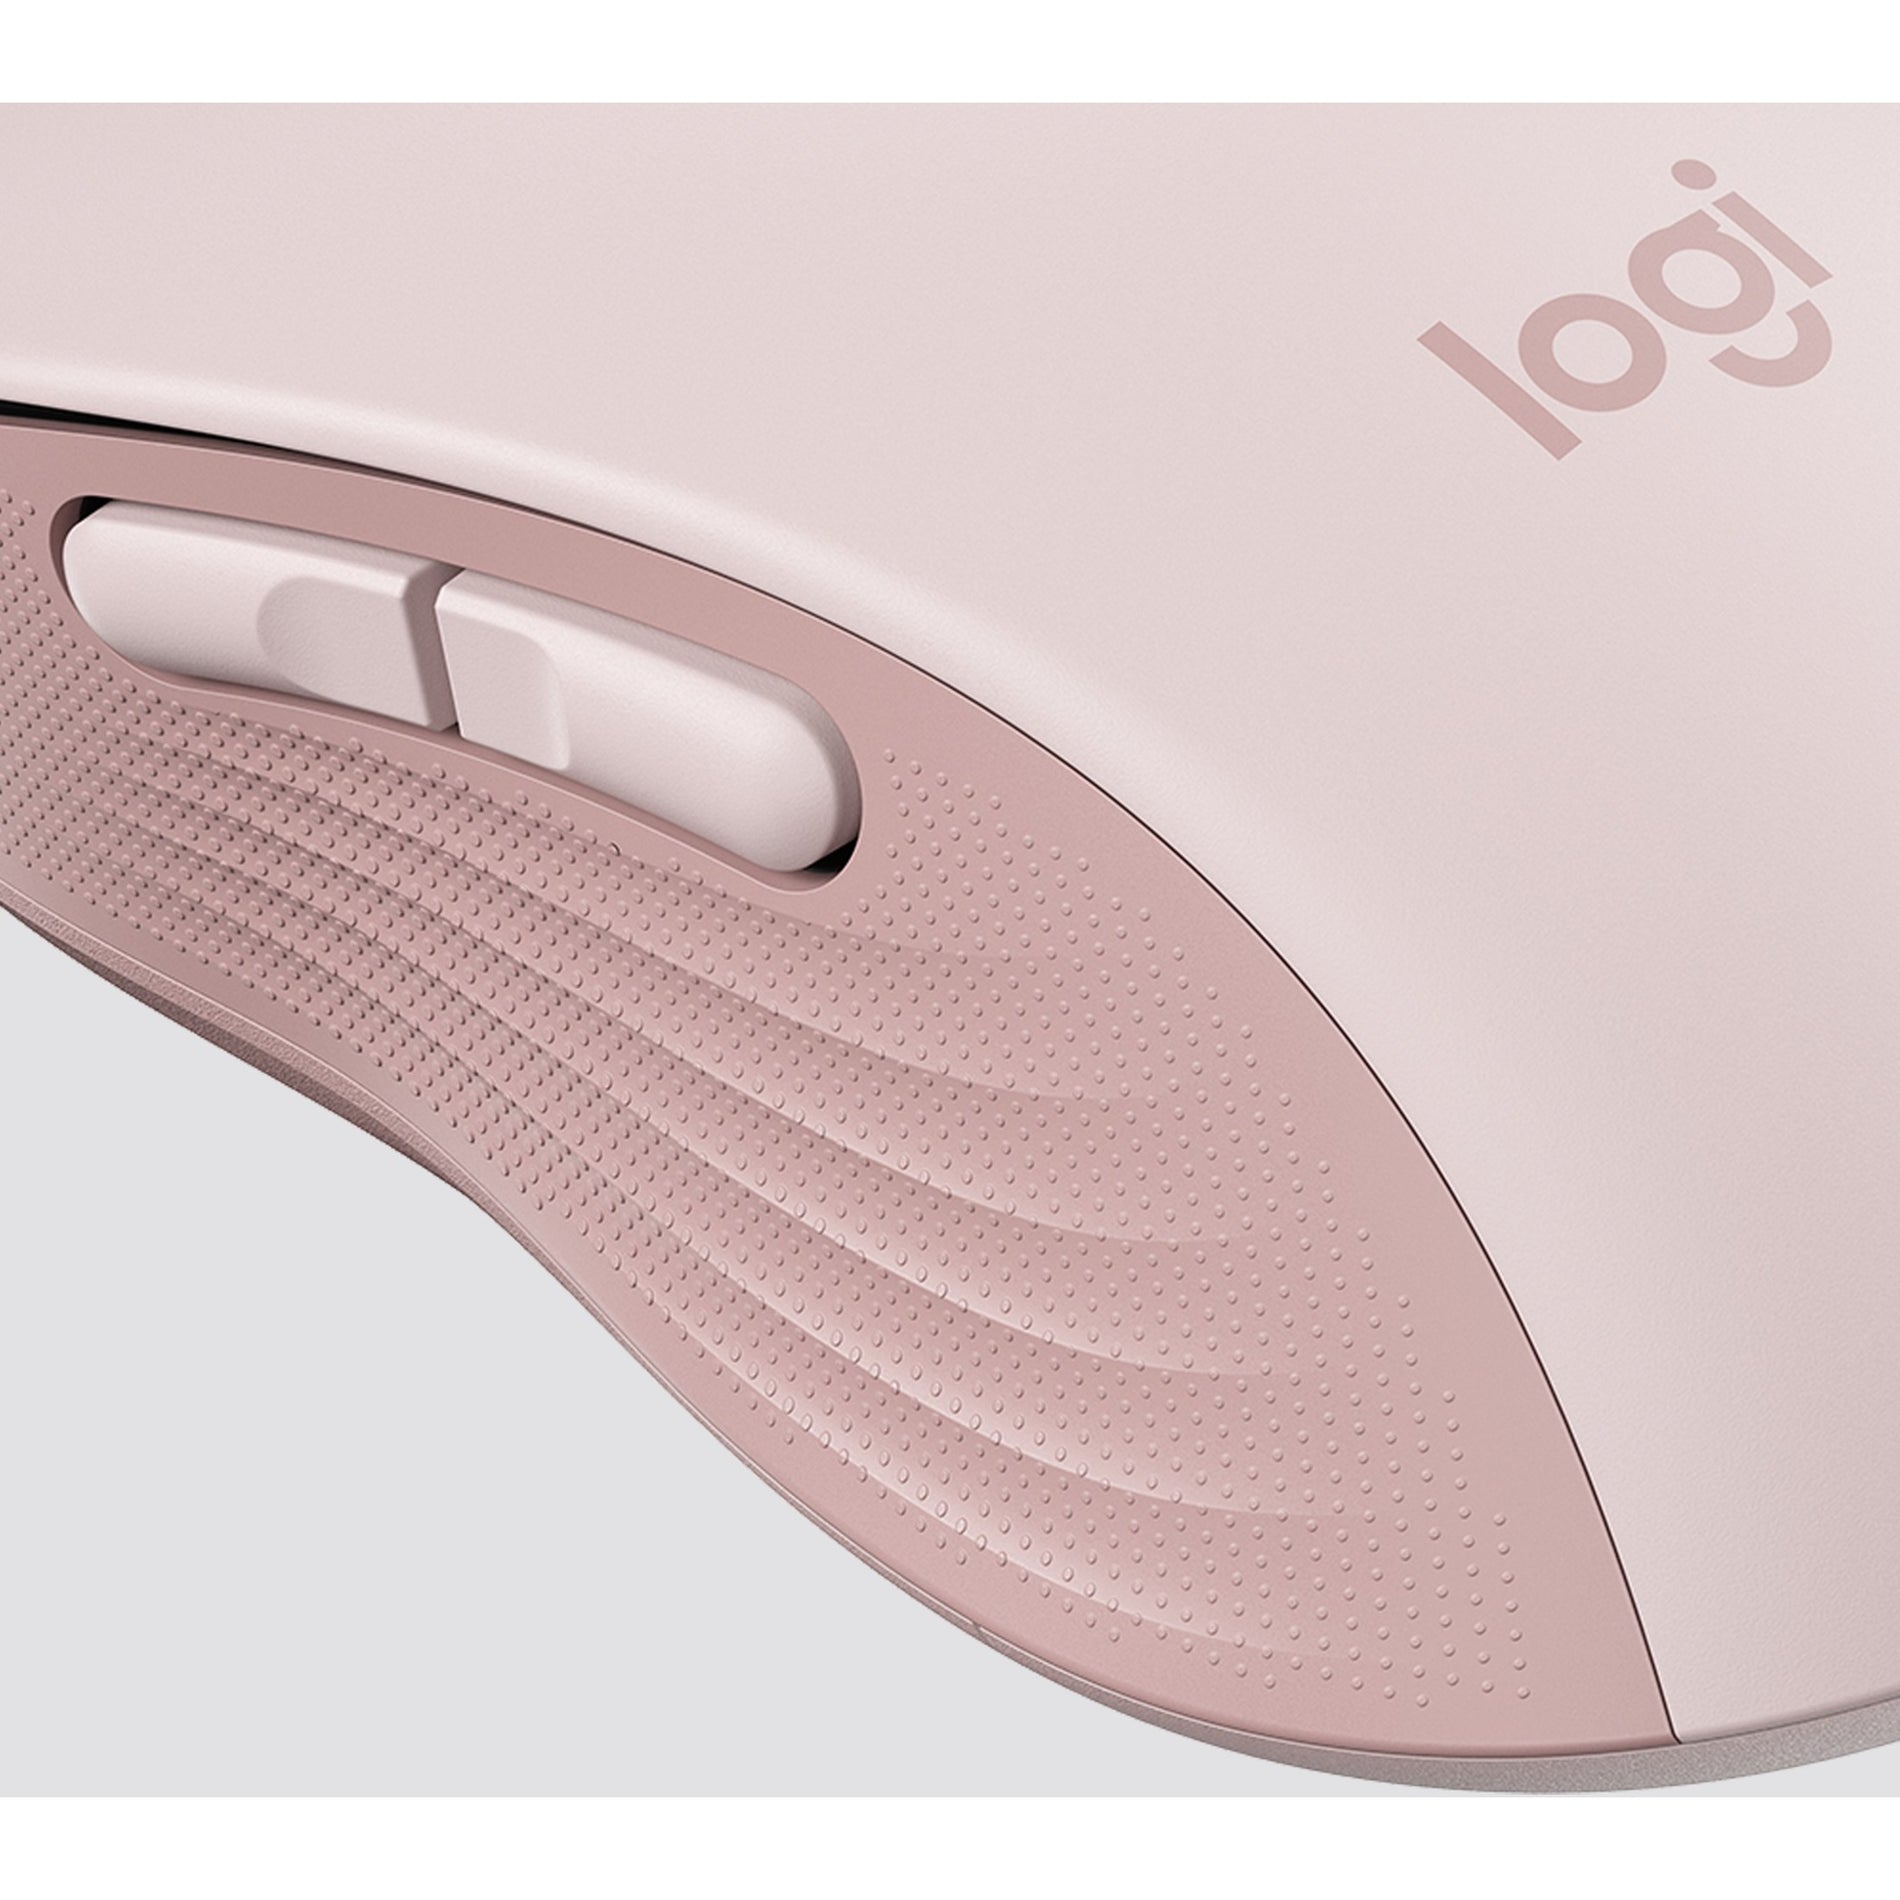 Logitech 910-006251 Signature M650 (Rose) Wireless Mouse, 2000 dpi, 5 Programmable Buttons